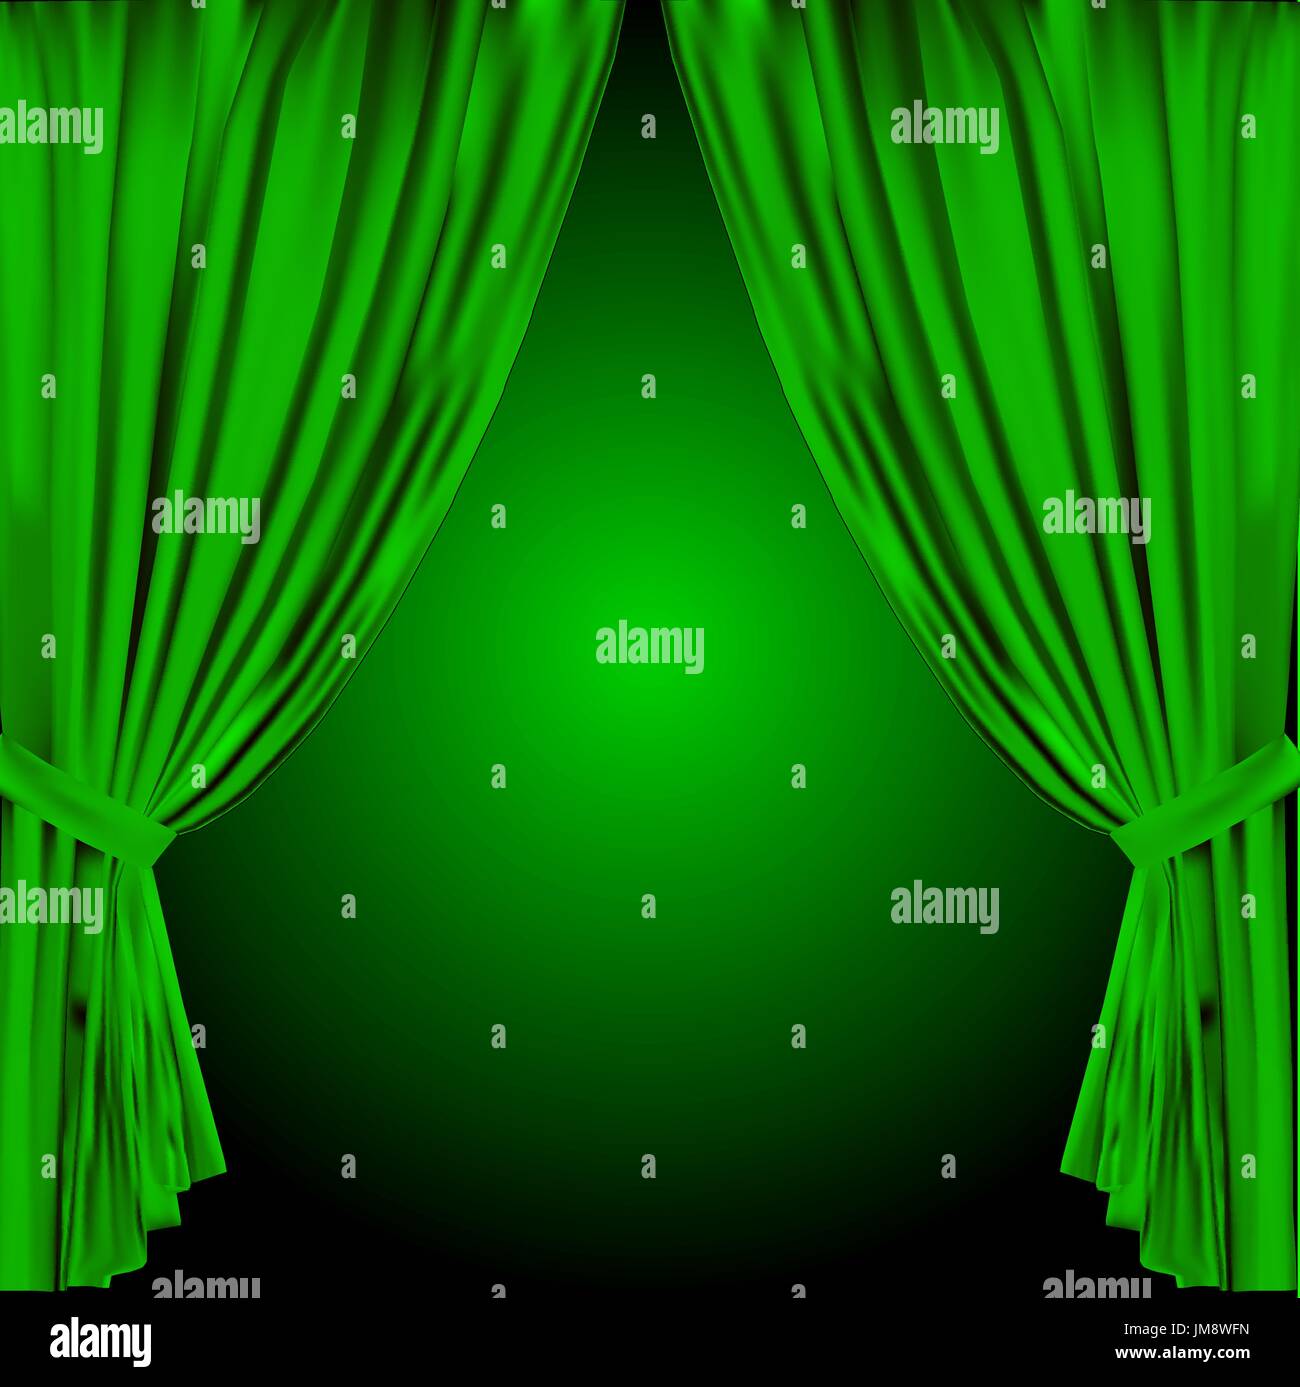 theatre curtain. vector illustration. 10eps. vector illustration Stock Vector